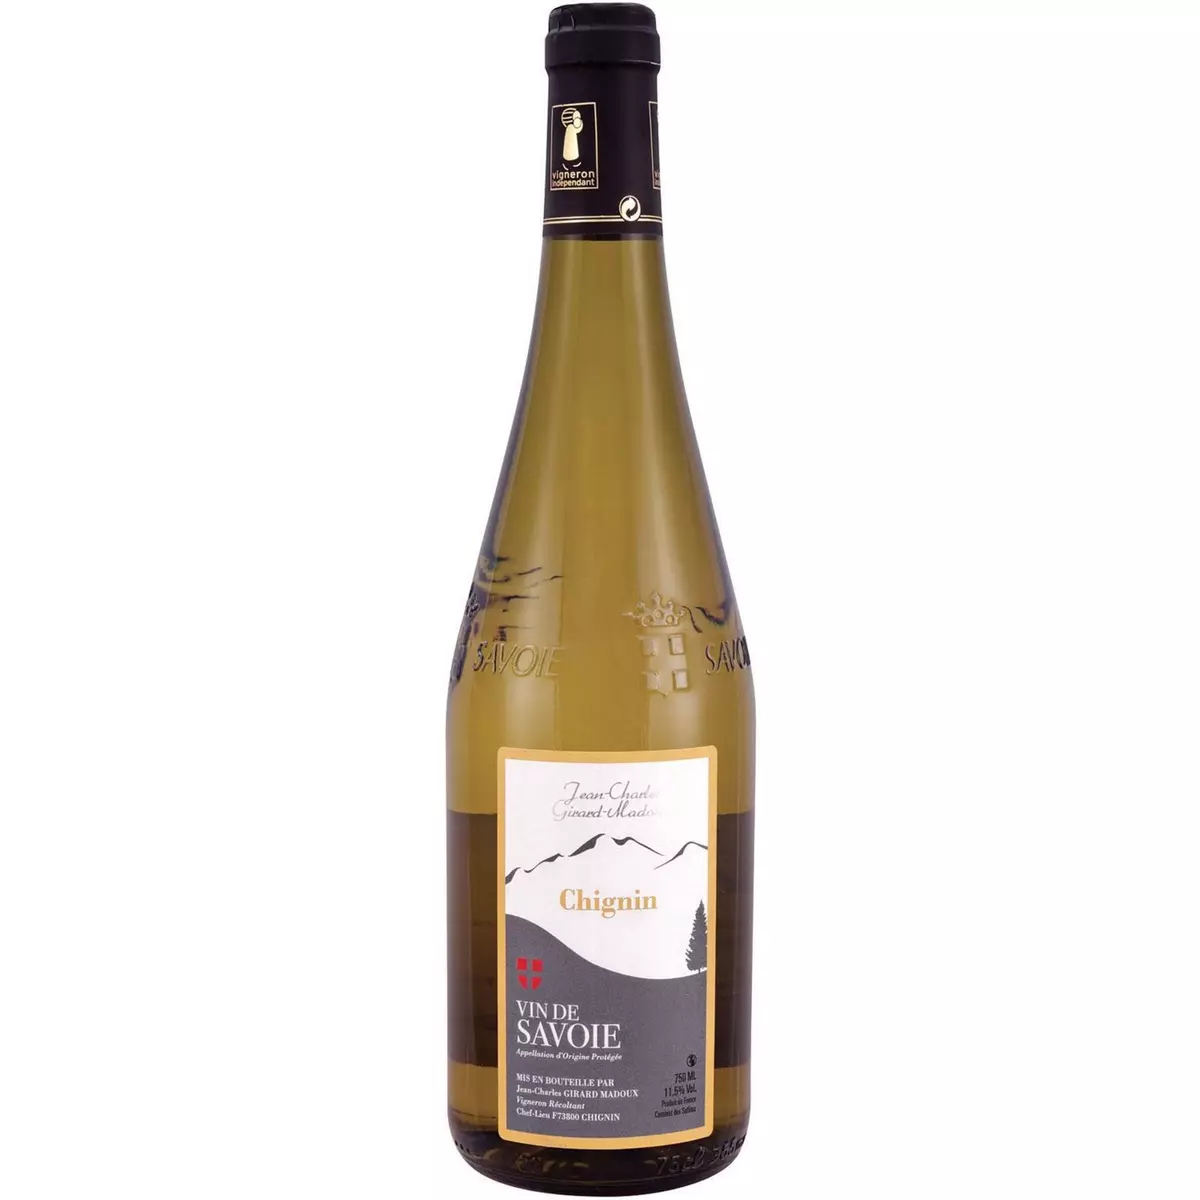 ADRIEN VACHER AOP Vin de Savoie Chignin Jean Charles Girard Madoux blanc 75cl